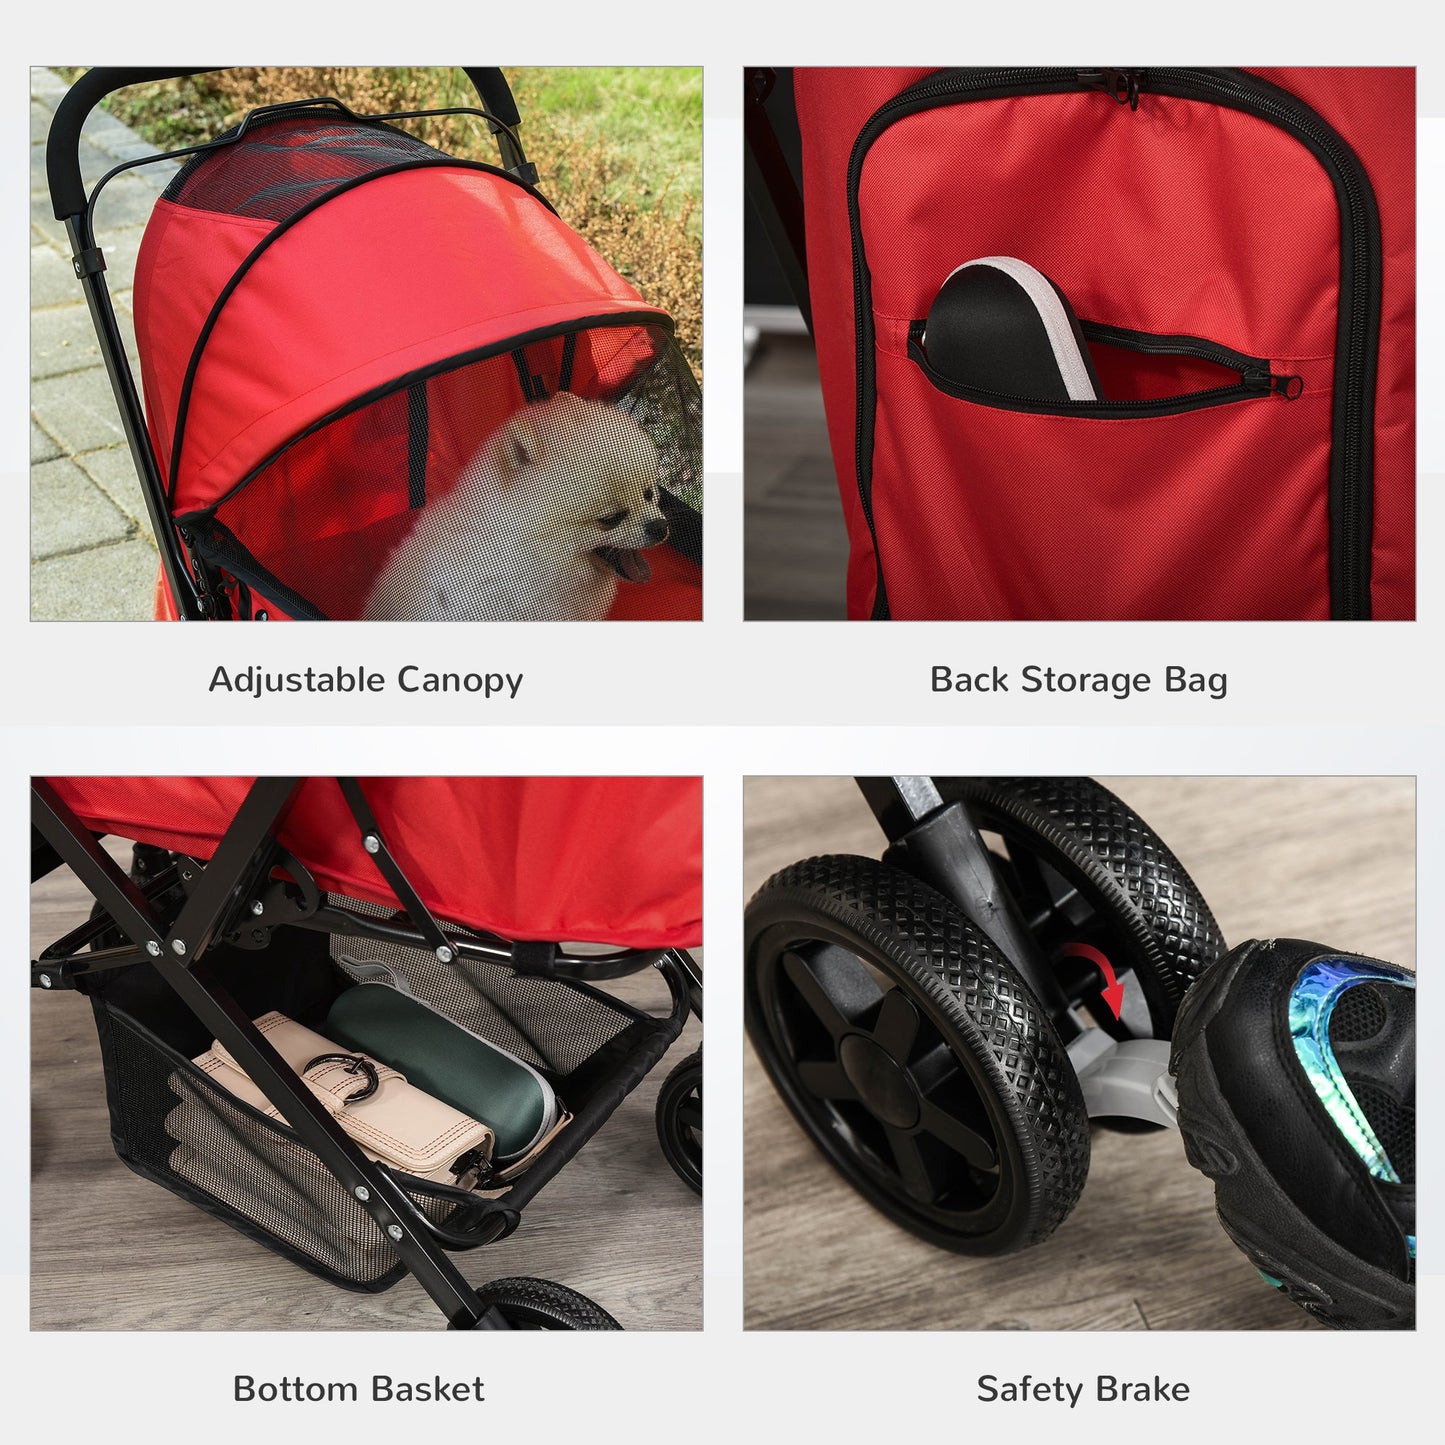 PawHut Pet Stroller Foldable Travel Dog Cat Carriage w/ Reversible Handle Brake Basket